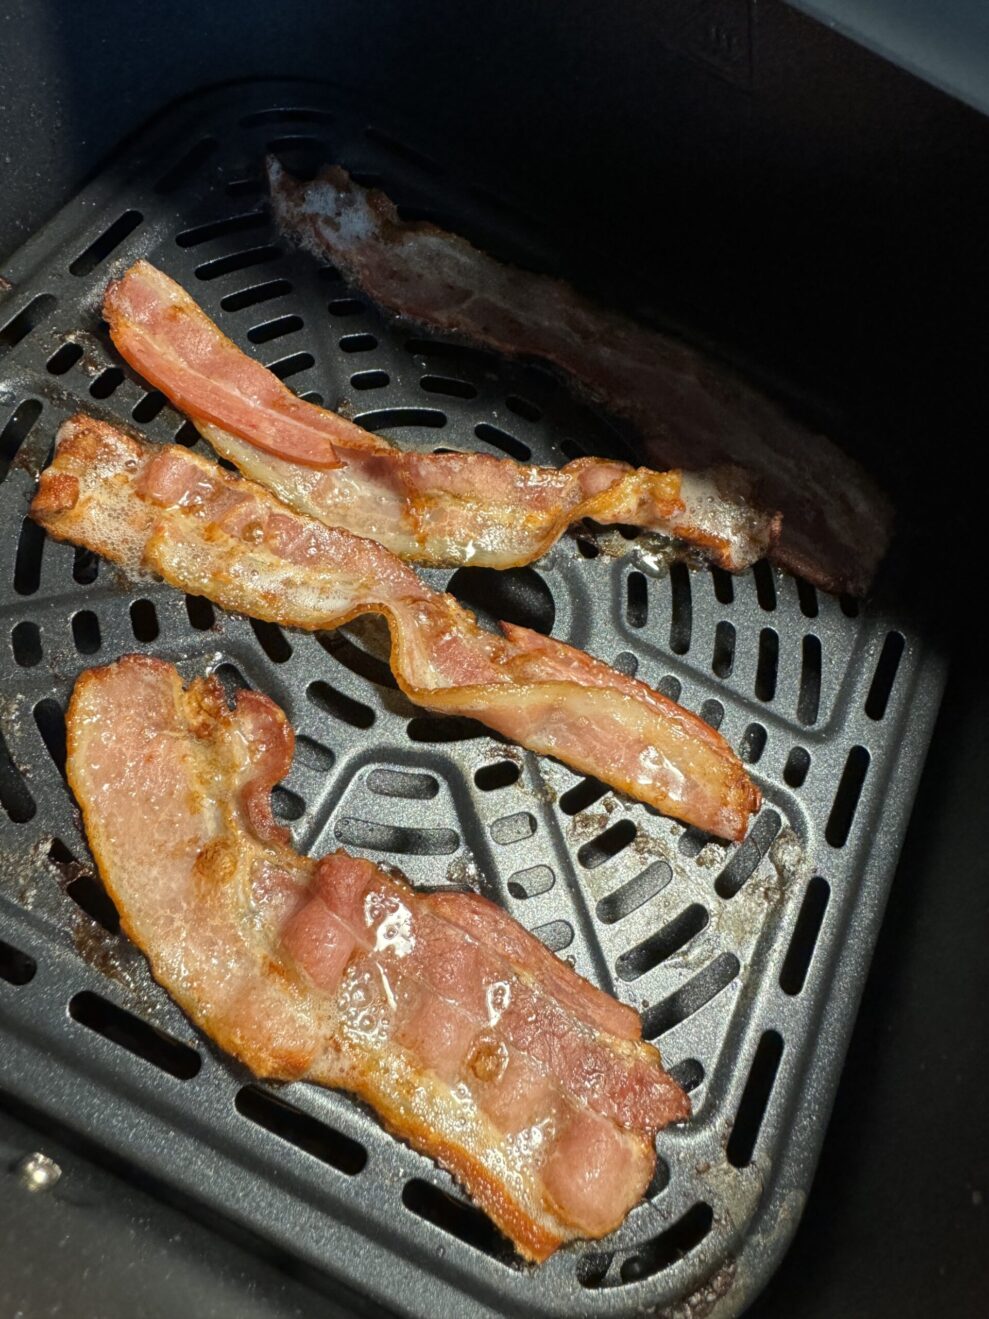 Cosori Dual Blaze bacon